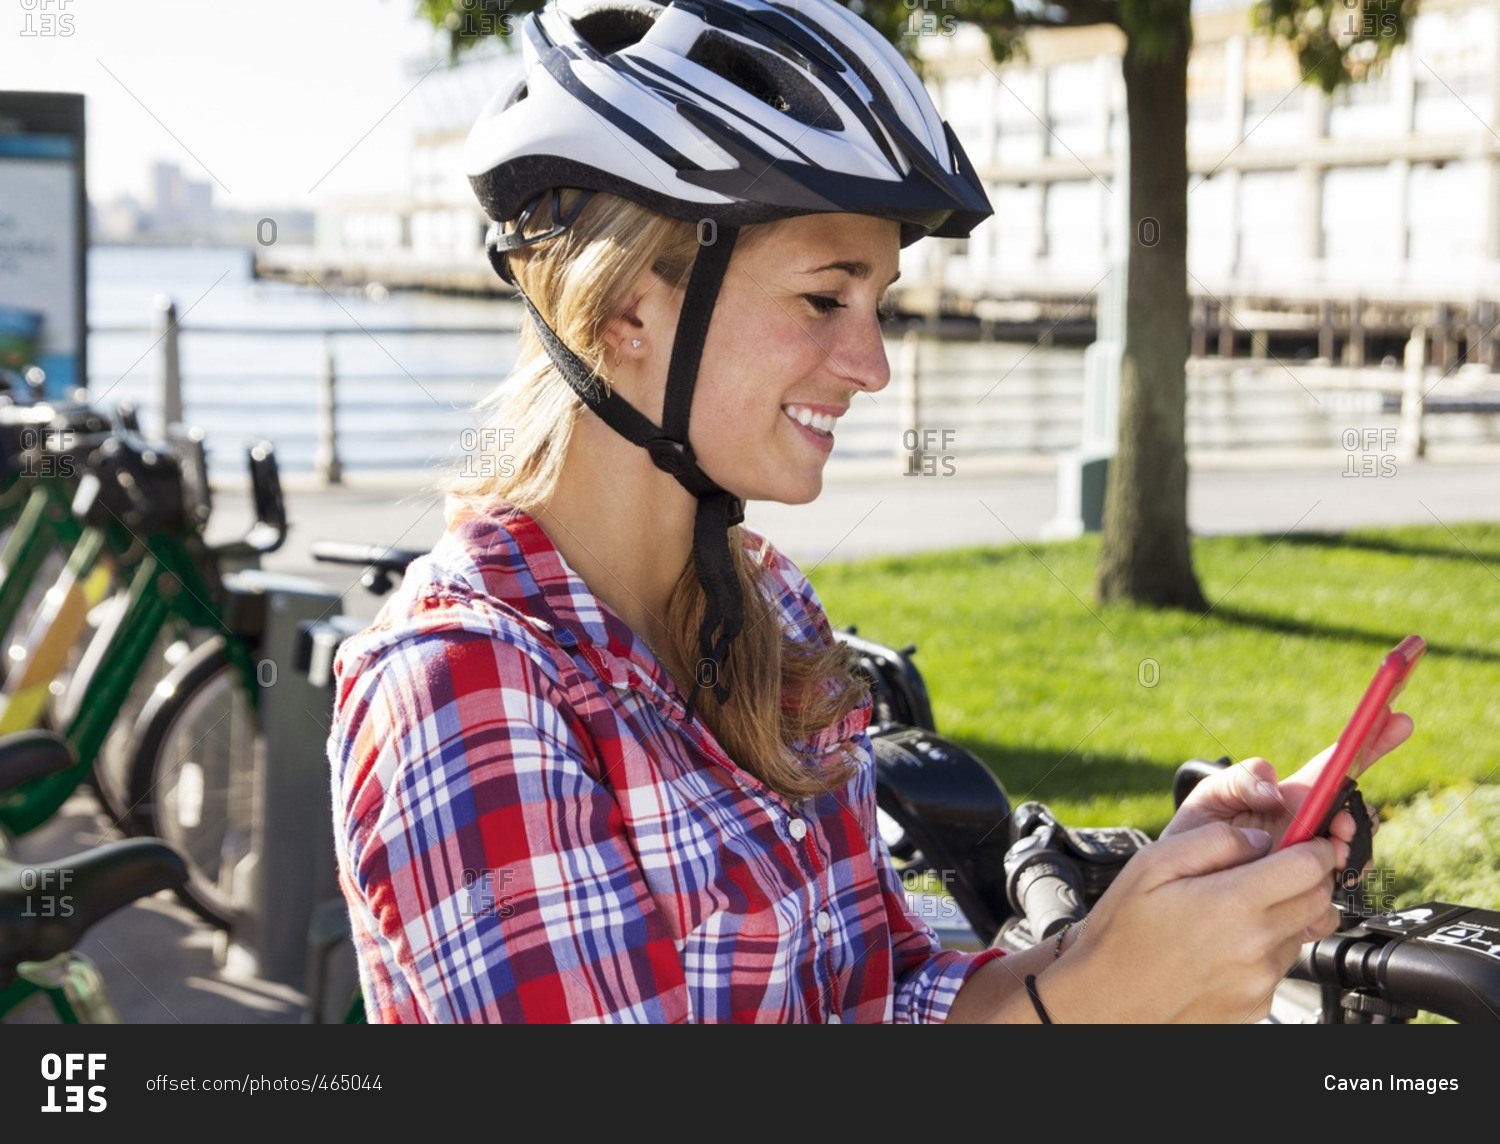 Woman wearing helmet using phone while standing against bicycle rack in city